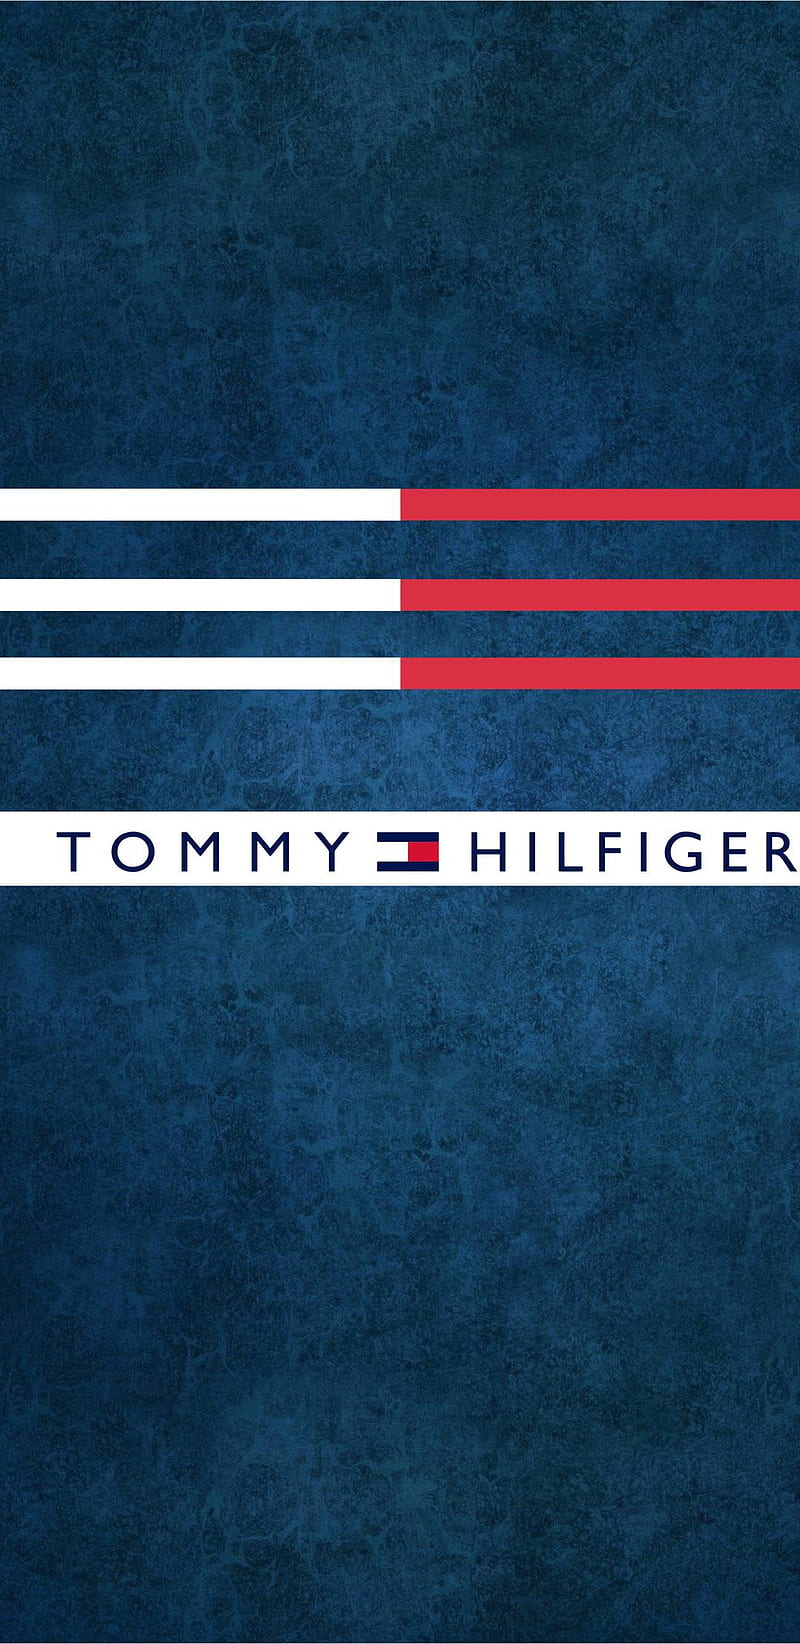 Tommy hilfiger 1080P, 2K, 4K, 5K HD wallpapers free download